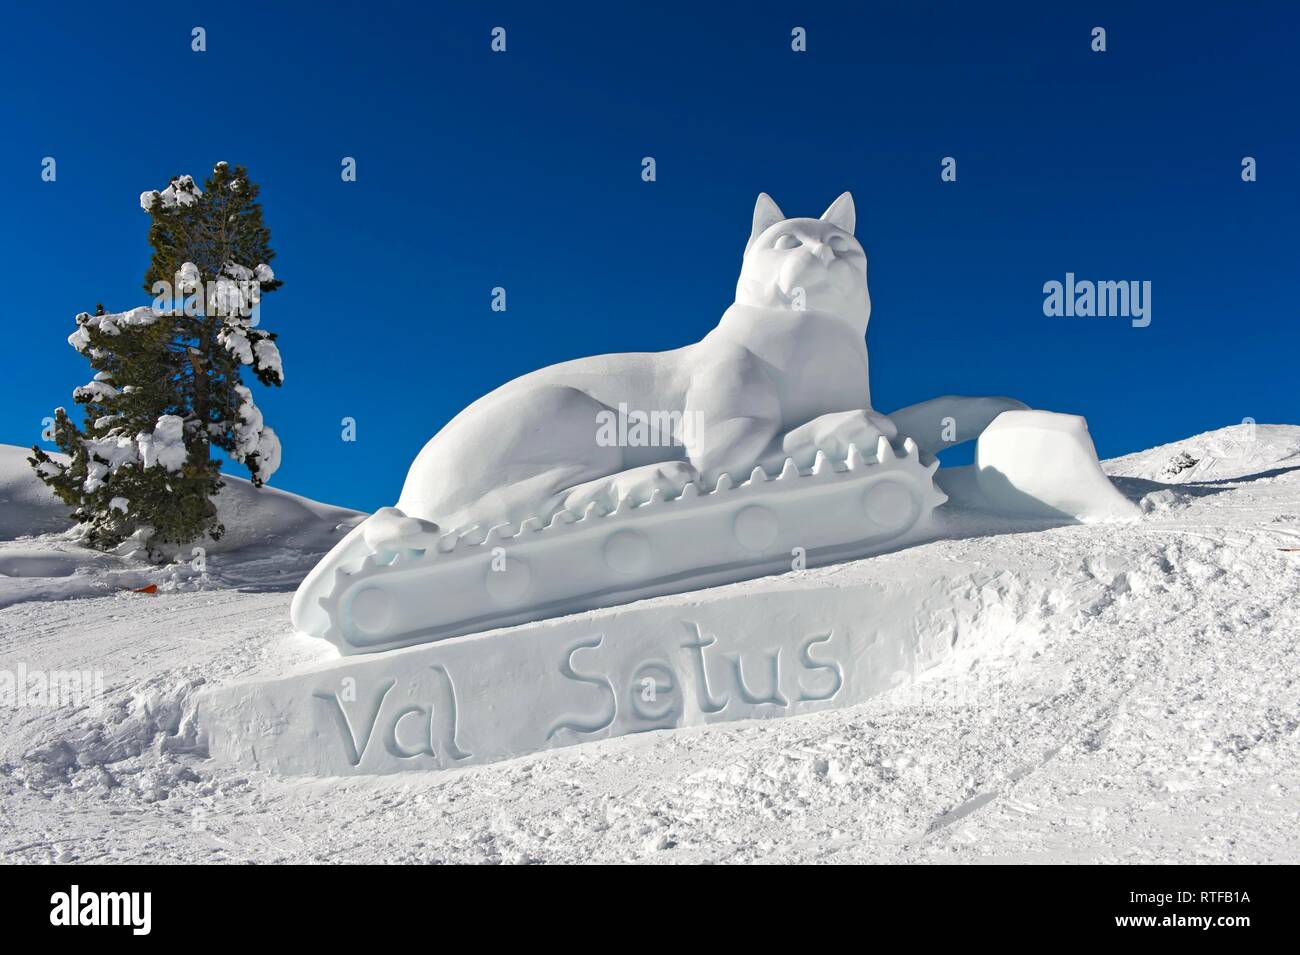 Ice sculpture cat figure, snow cat, Val Setus, Corvara, Badia, South Tyrol, Italy Stock Photo